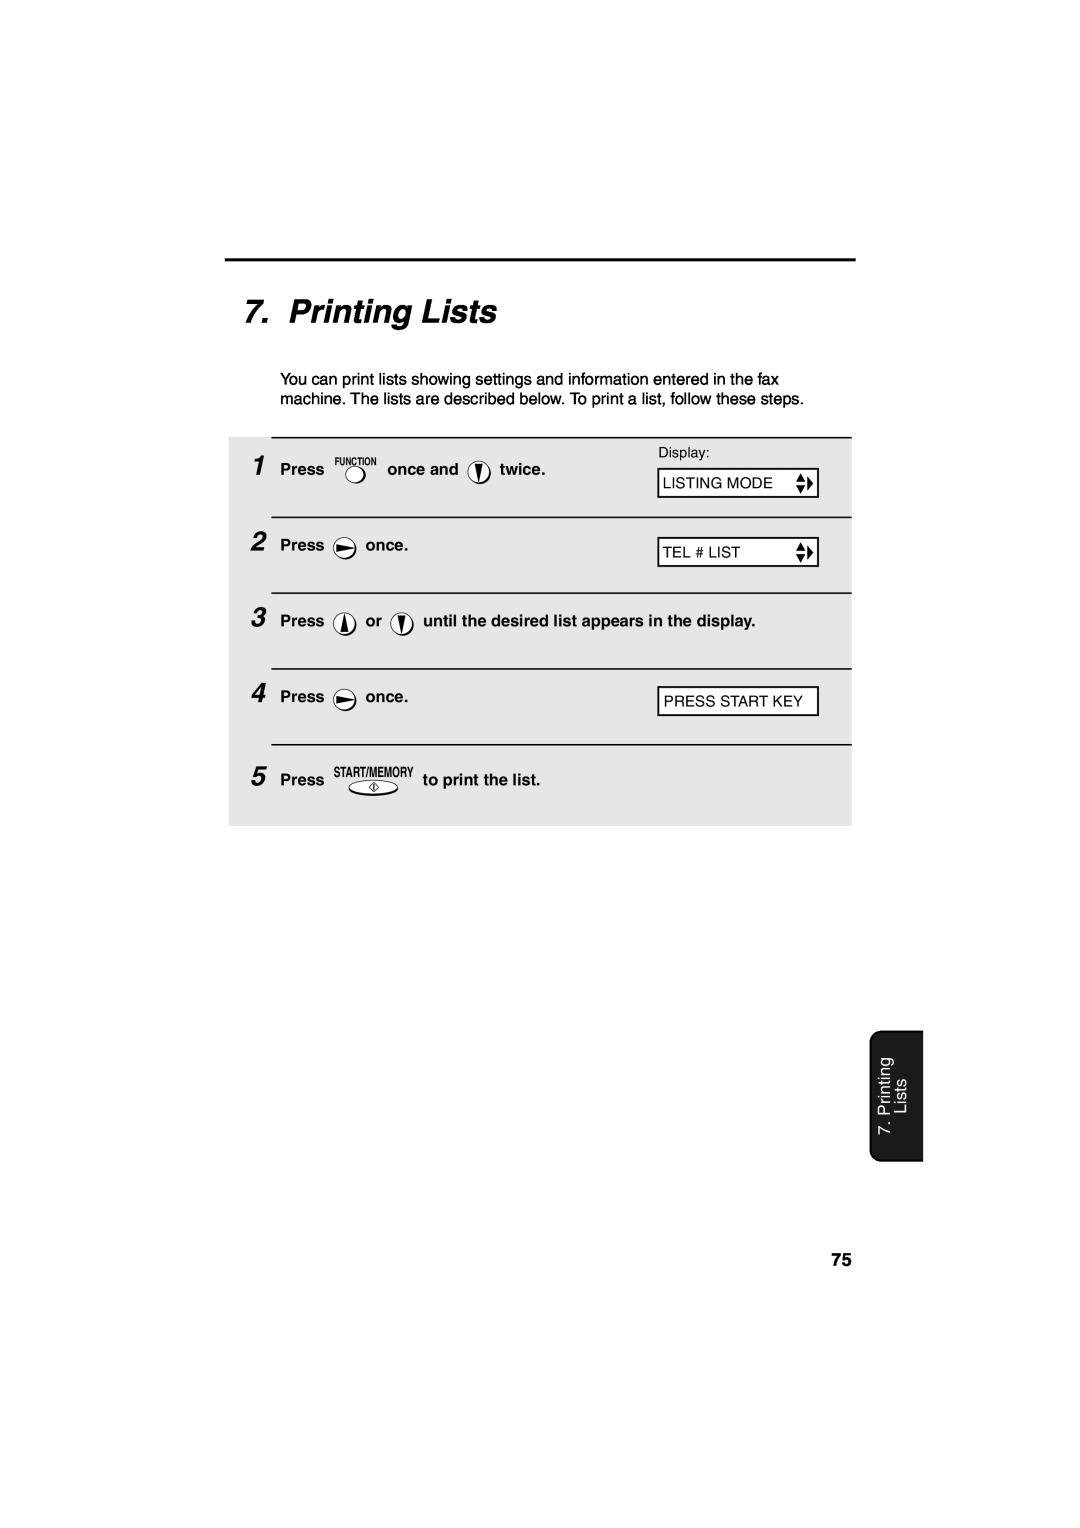 Sharp UX-A260 manual Printing Lists, Display, Listing Mode, Tel # List 